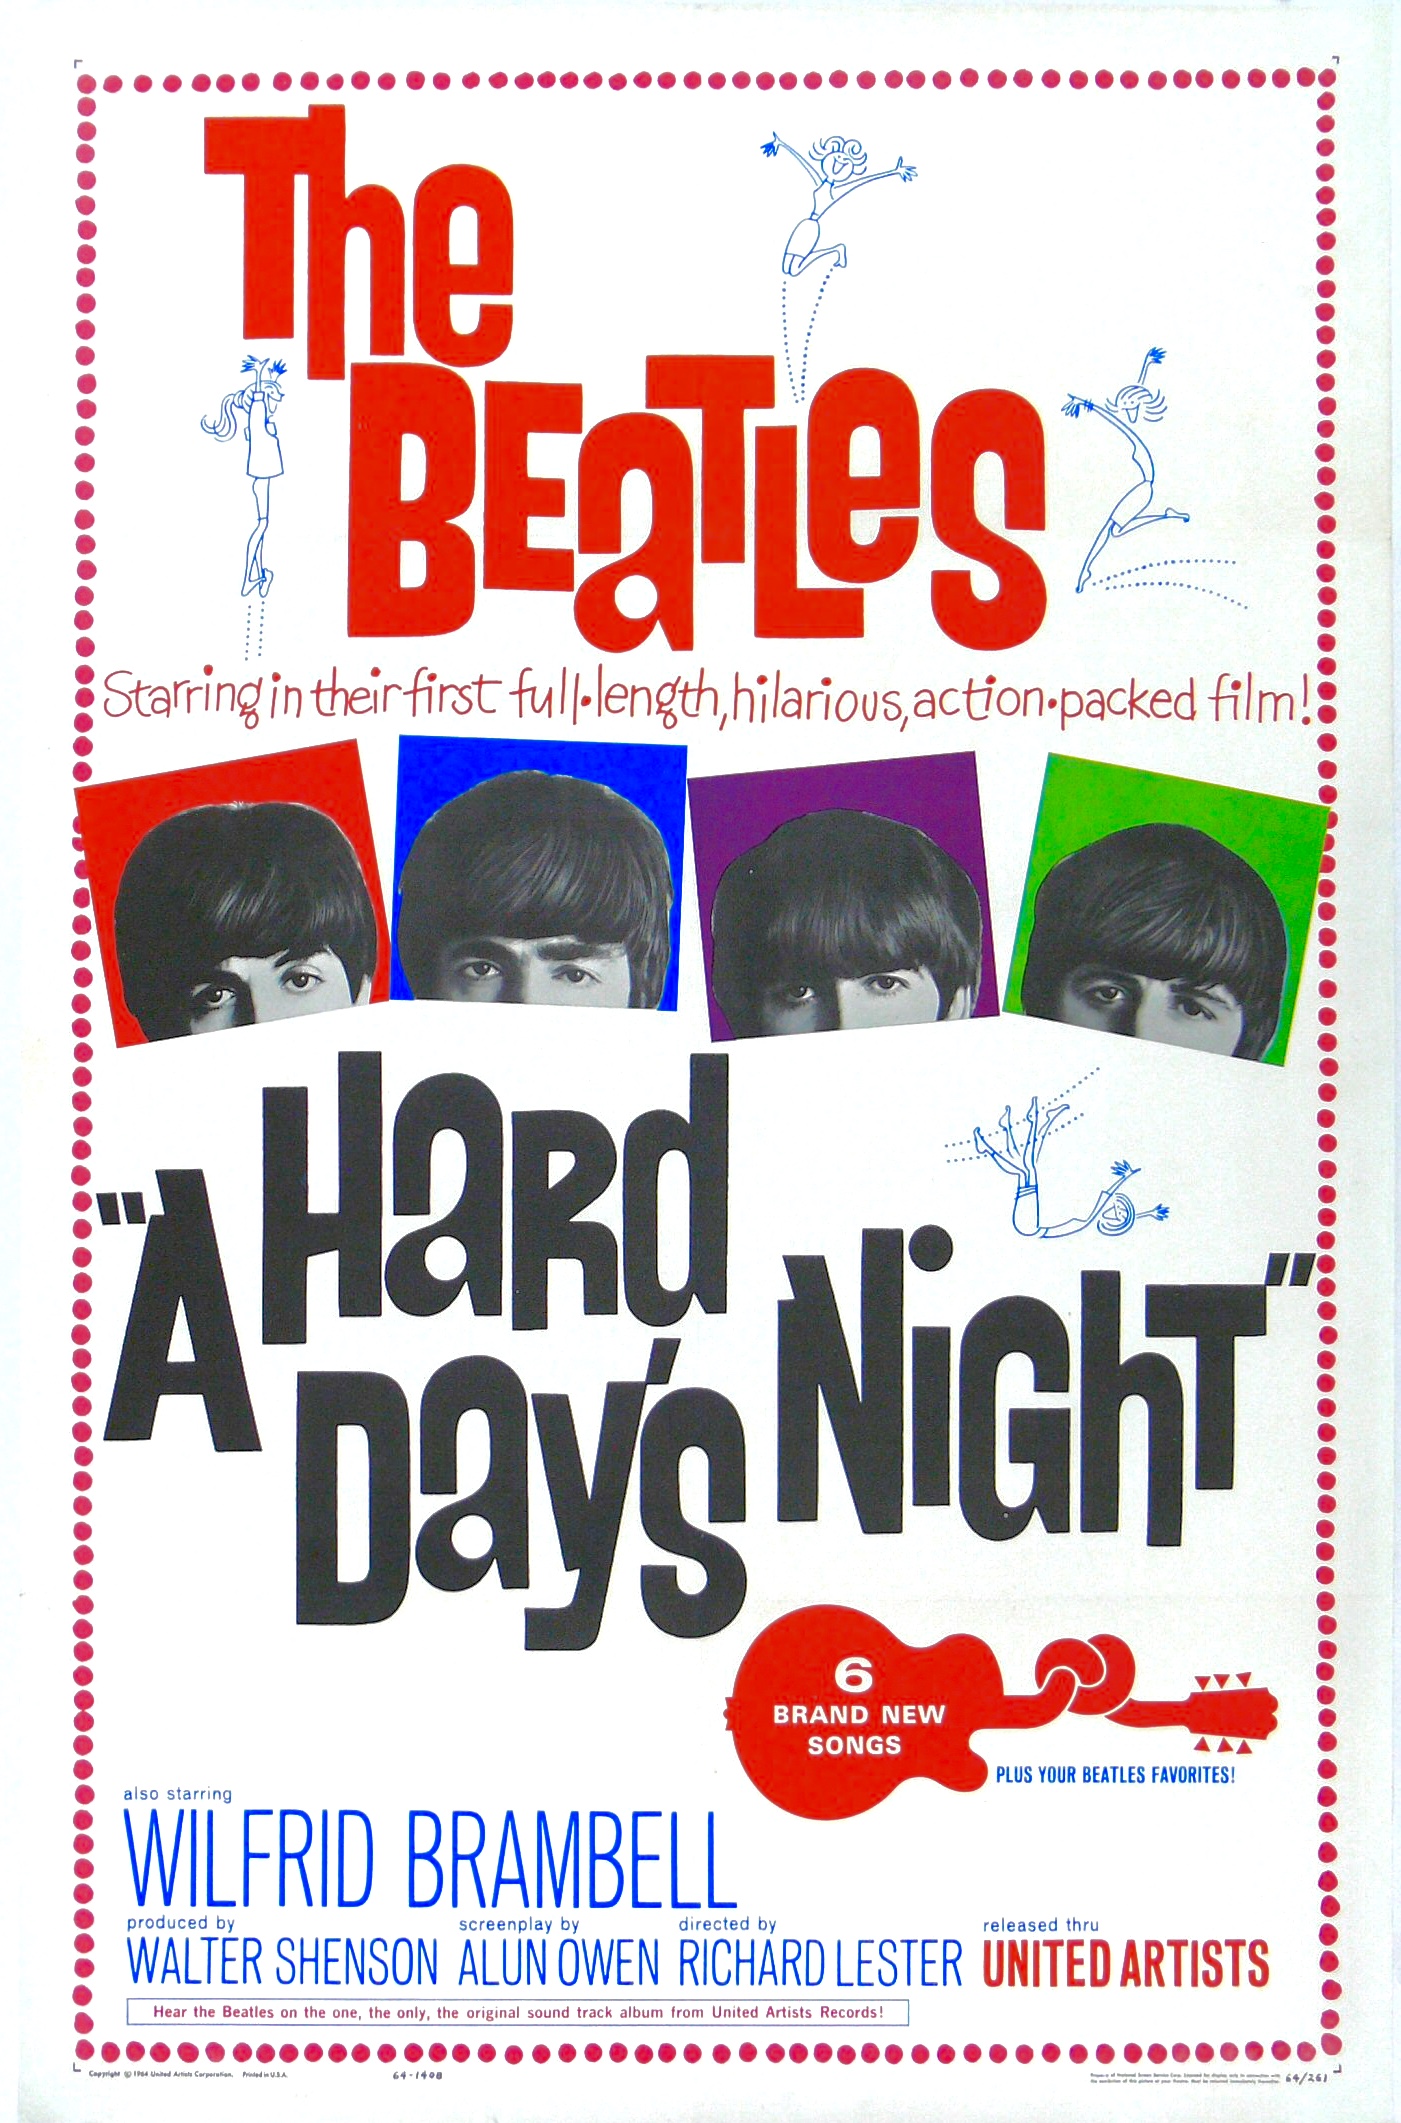 A Hard Days Night (1964) เดอะ บีเทิลล์ ขออัศจรรย์สักวันเหอะน่า